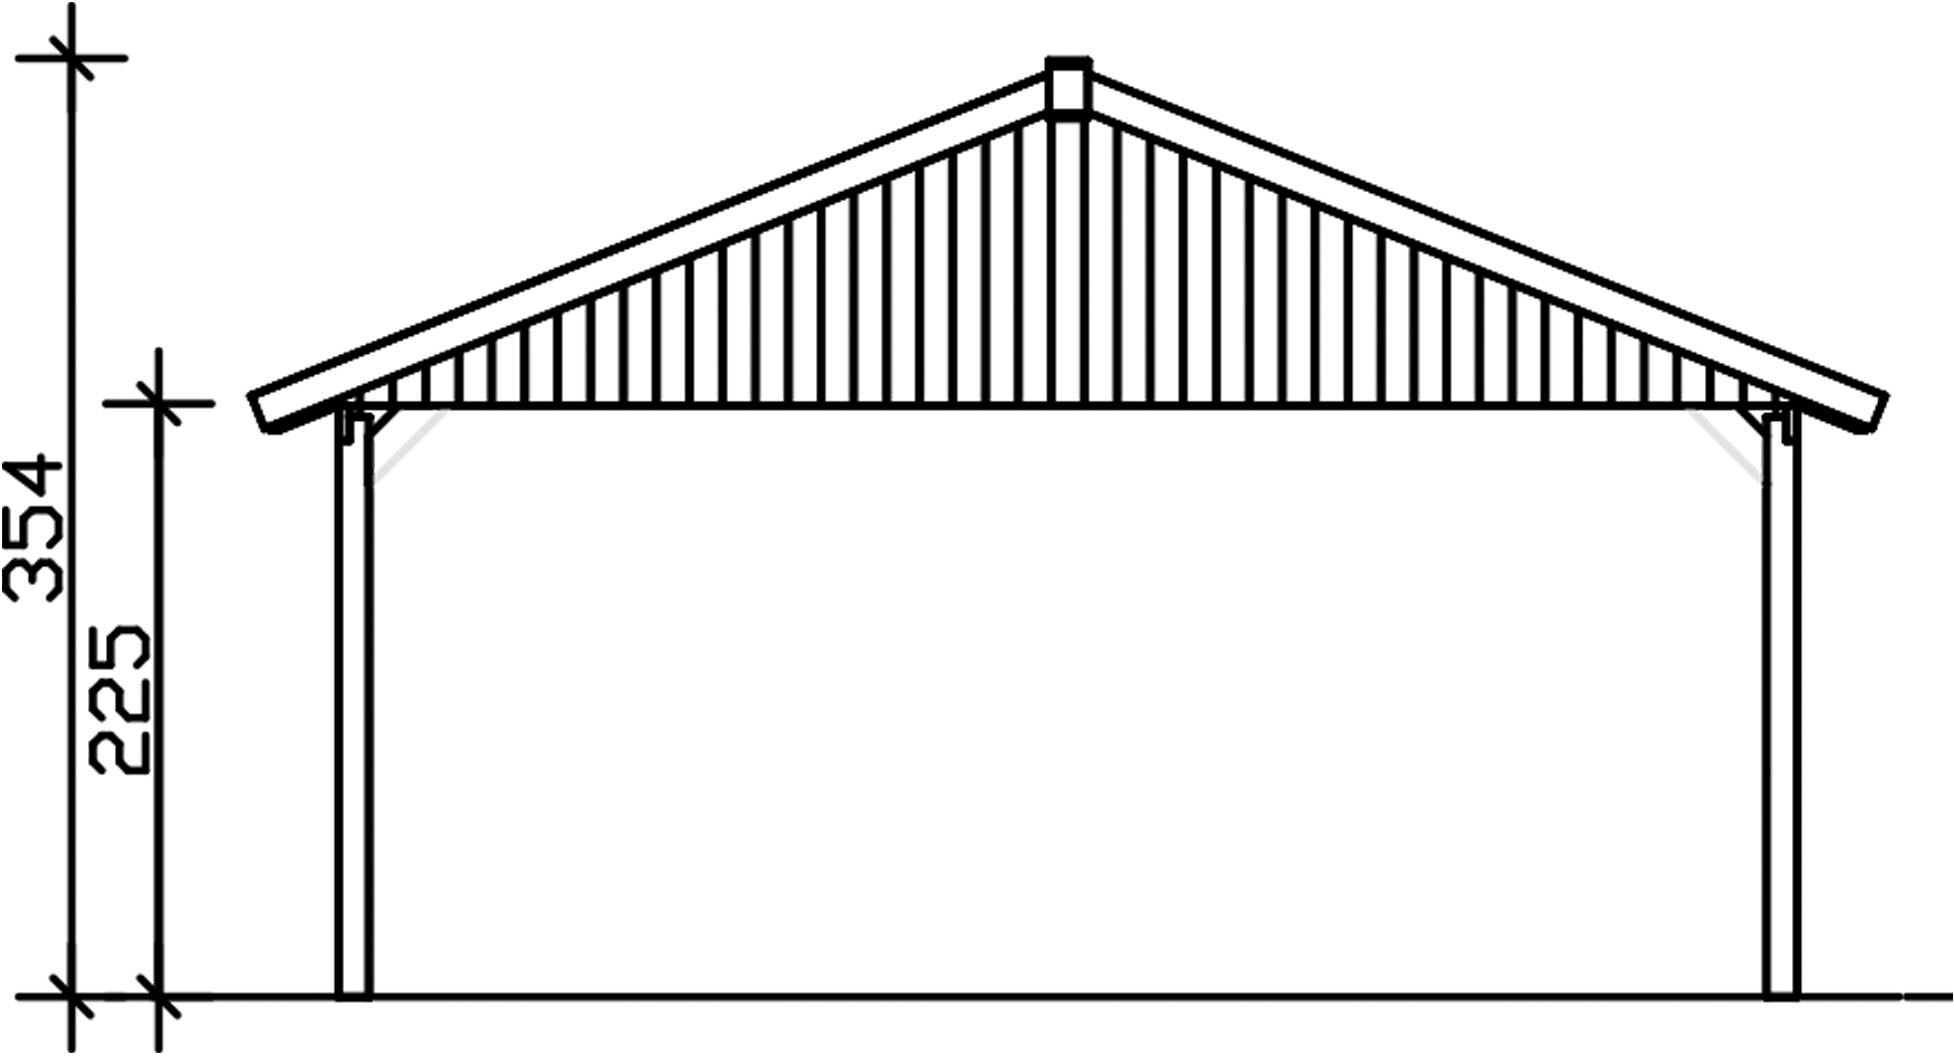 Skanholz Doppelcarport »Wallgau«, Nadelholz, 530 cm, Nussbaum, 620x750cm, mit Dachlattung